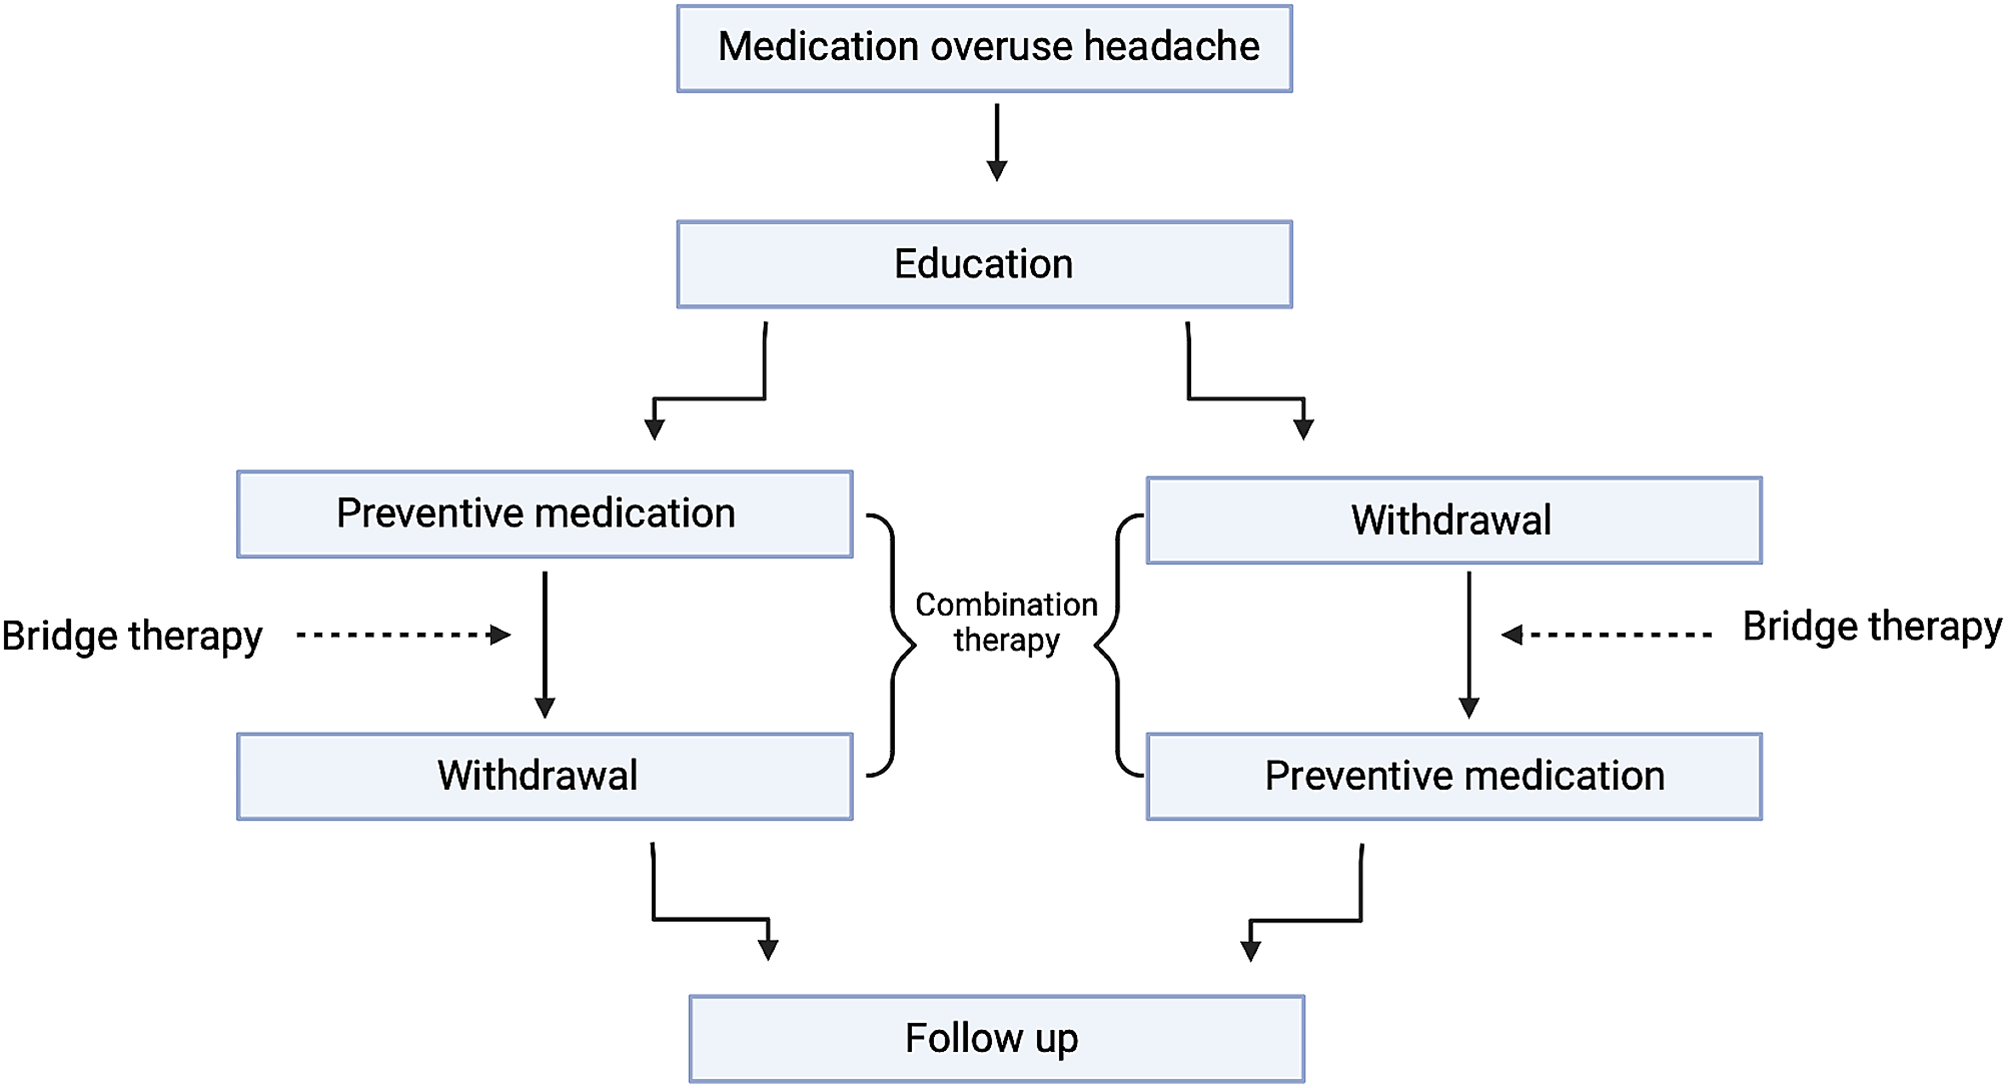 Medication-overuse headache: a narrative review